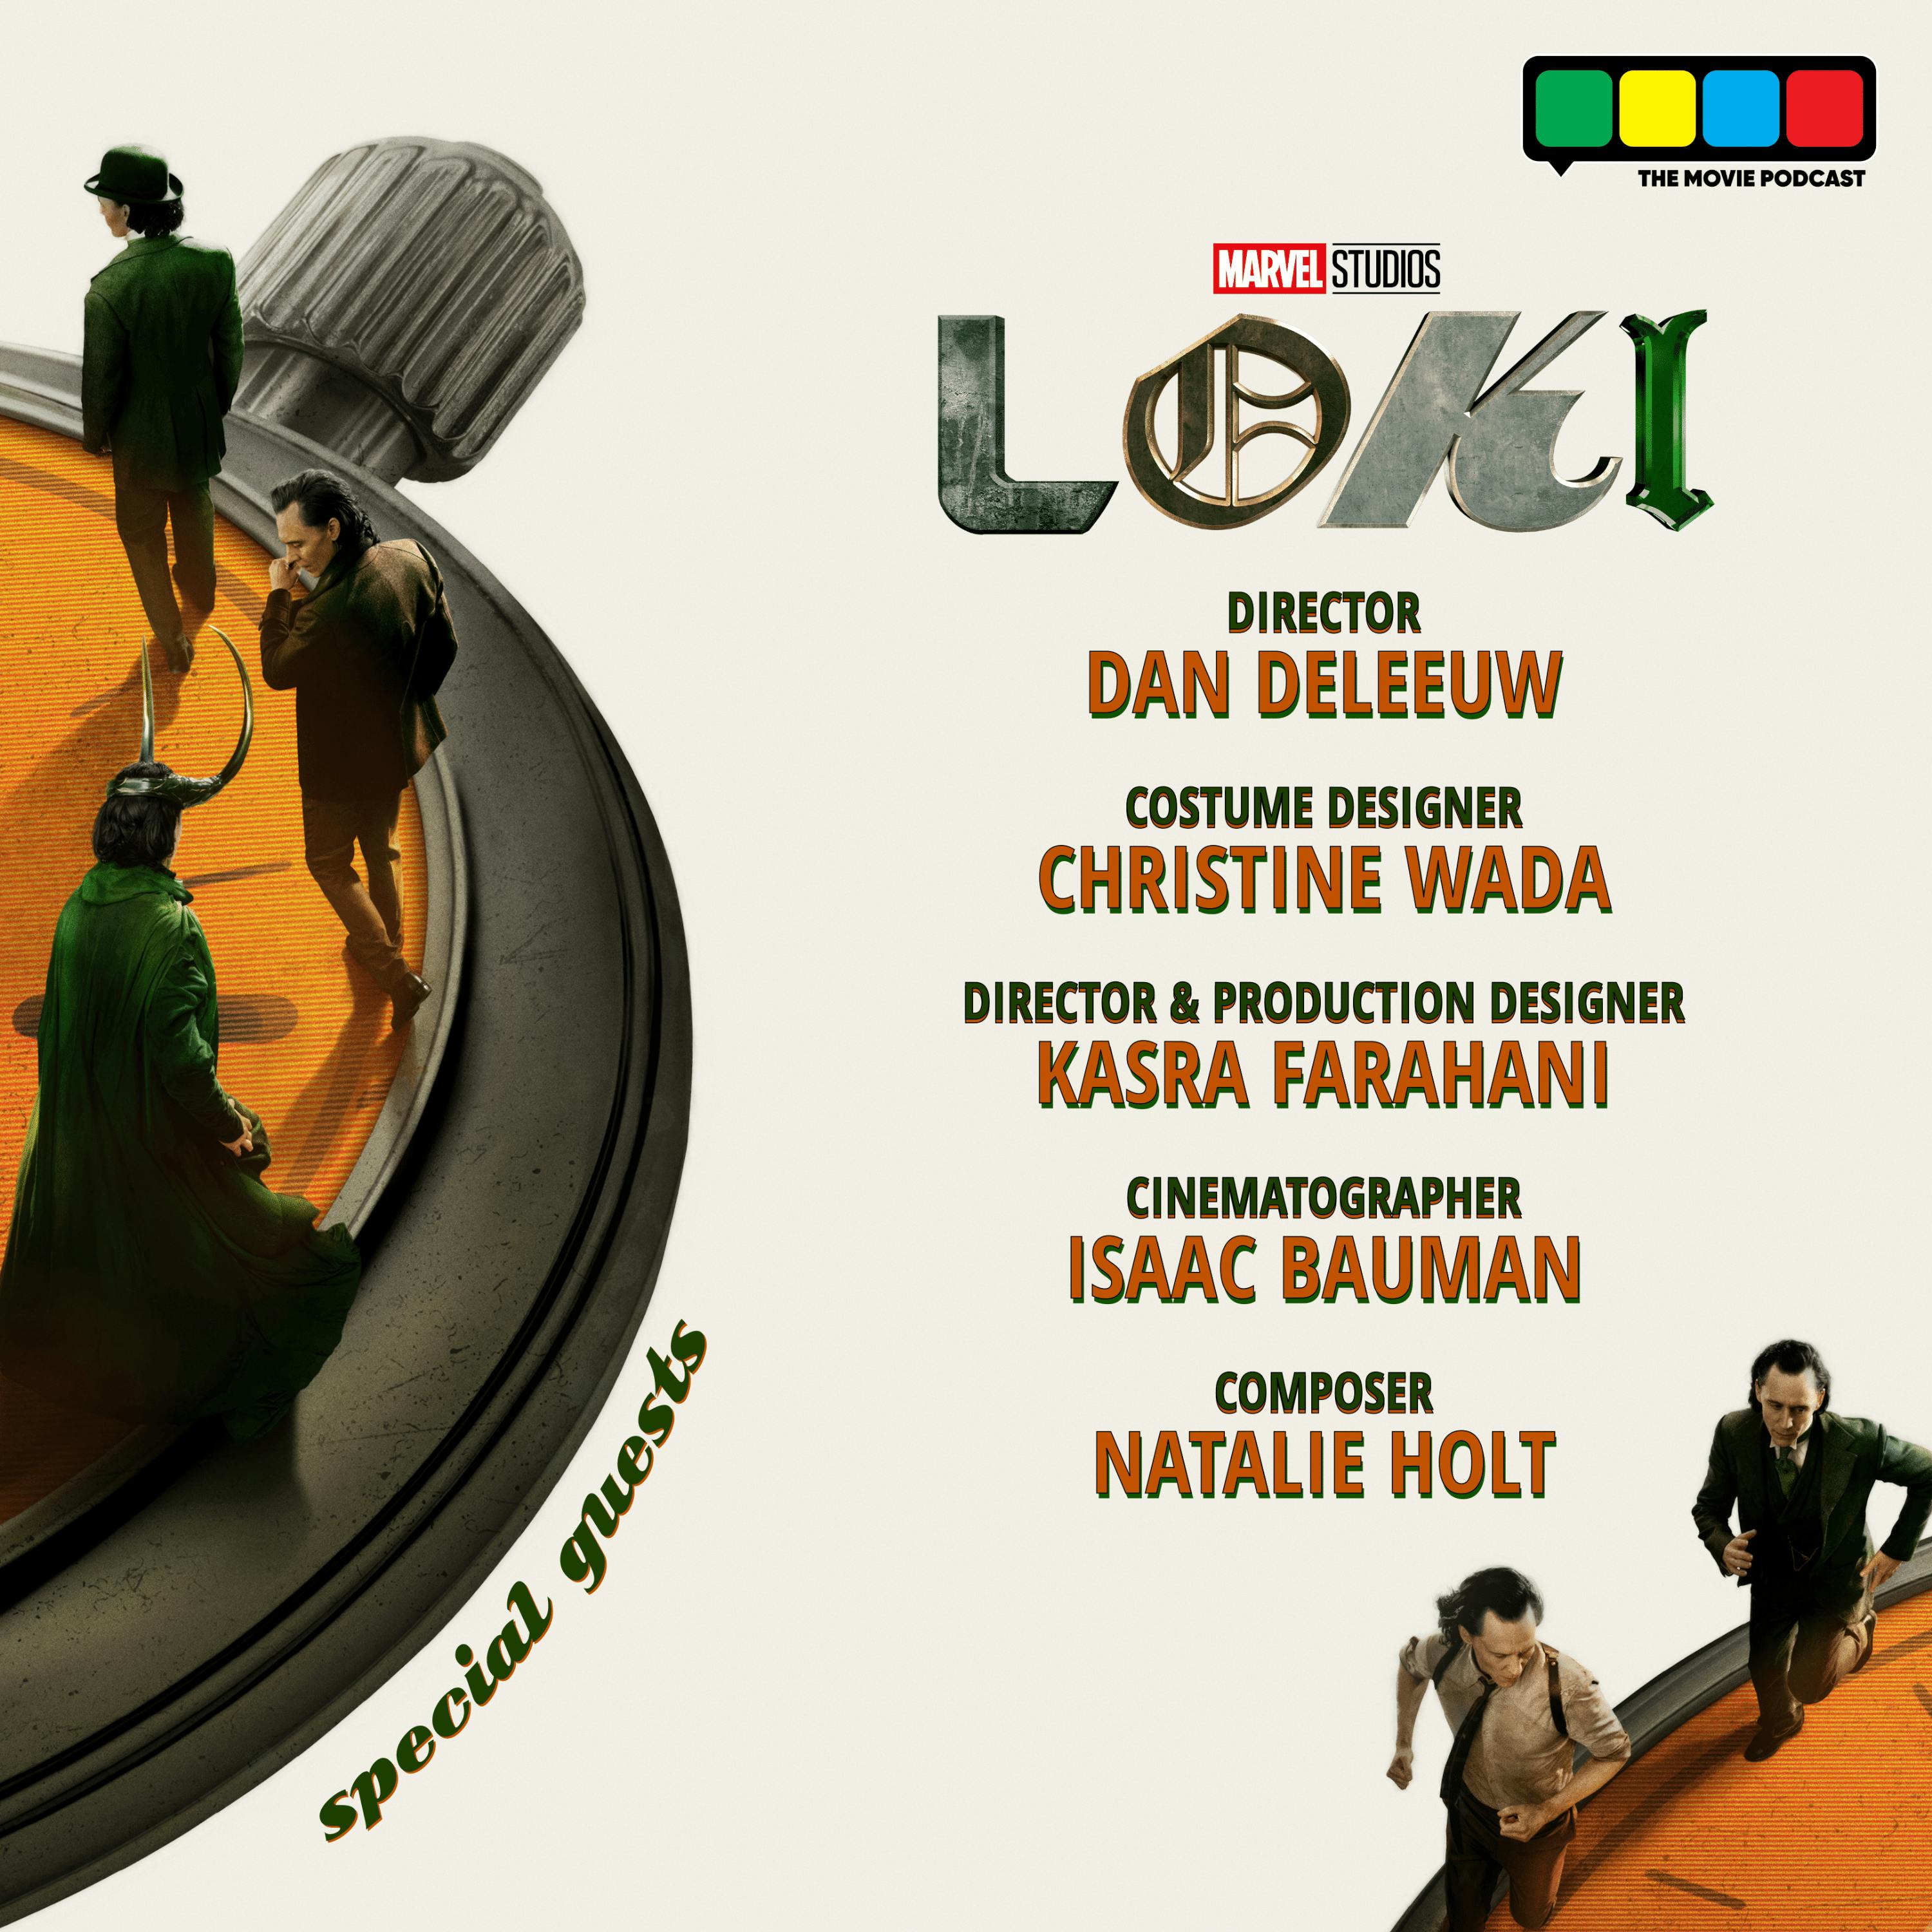 Loki Interview with Natalie Holt (Composer), Dan Deleeuw (Director), Christine Wada (Costume Designer), Kasra Farahani (Production Designer and Director), and Isaac Bauman (Cinematographer)